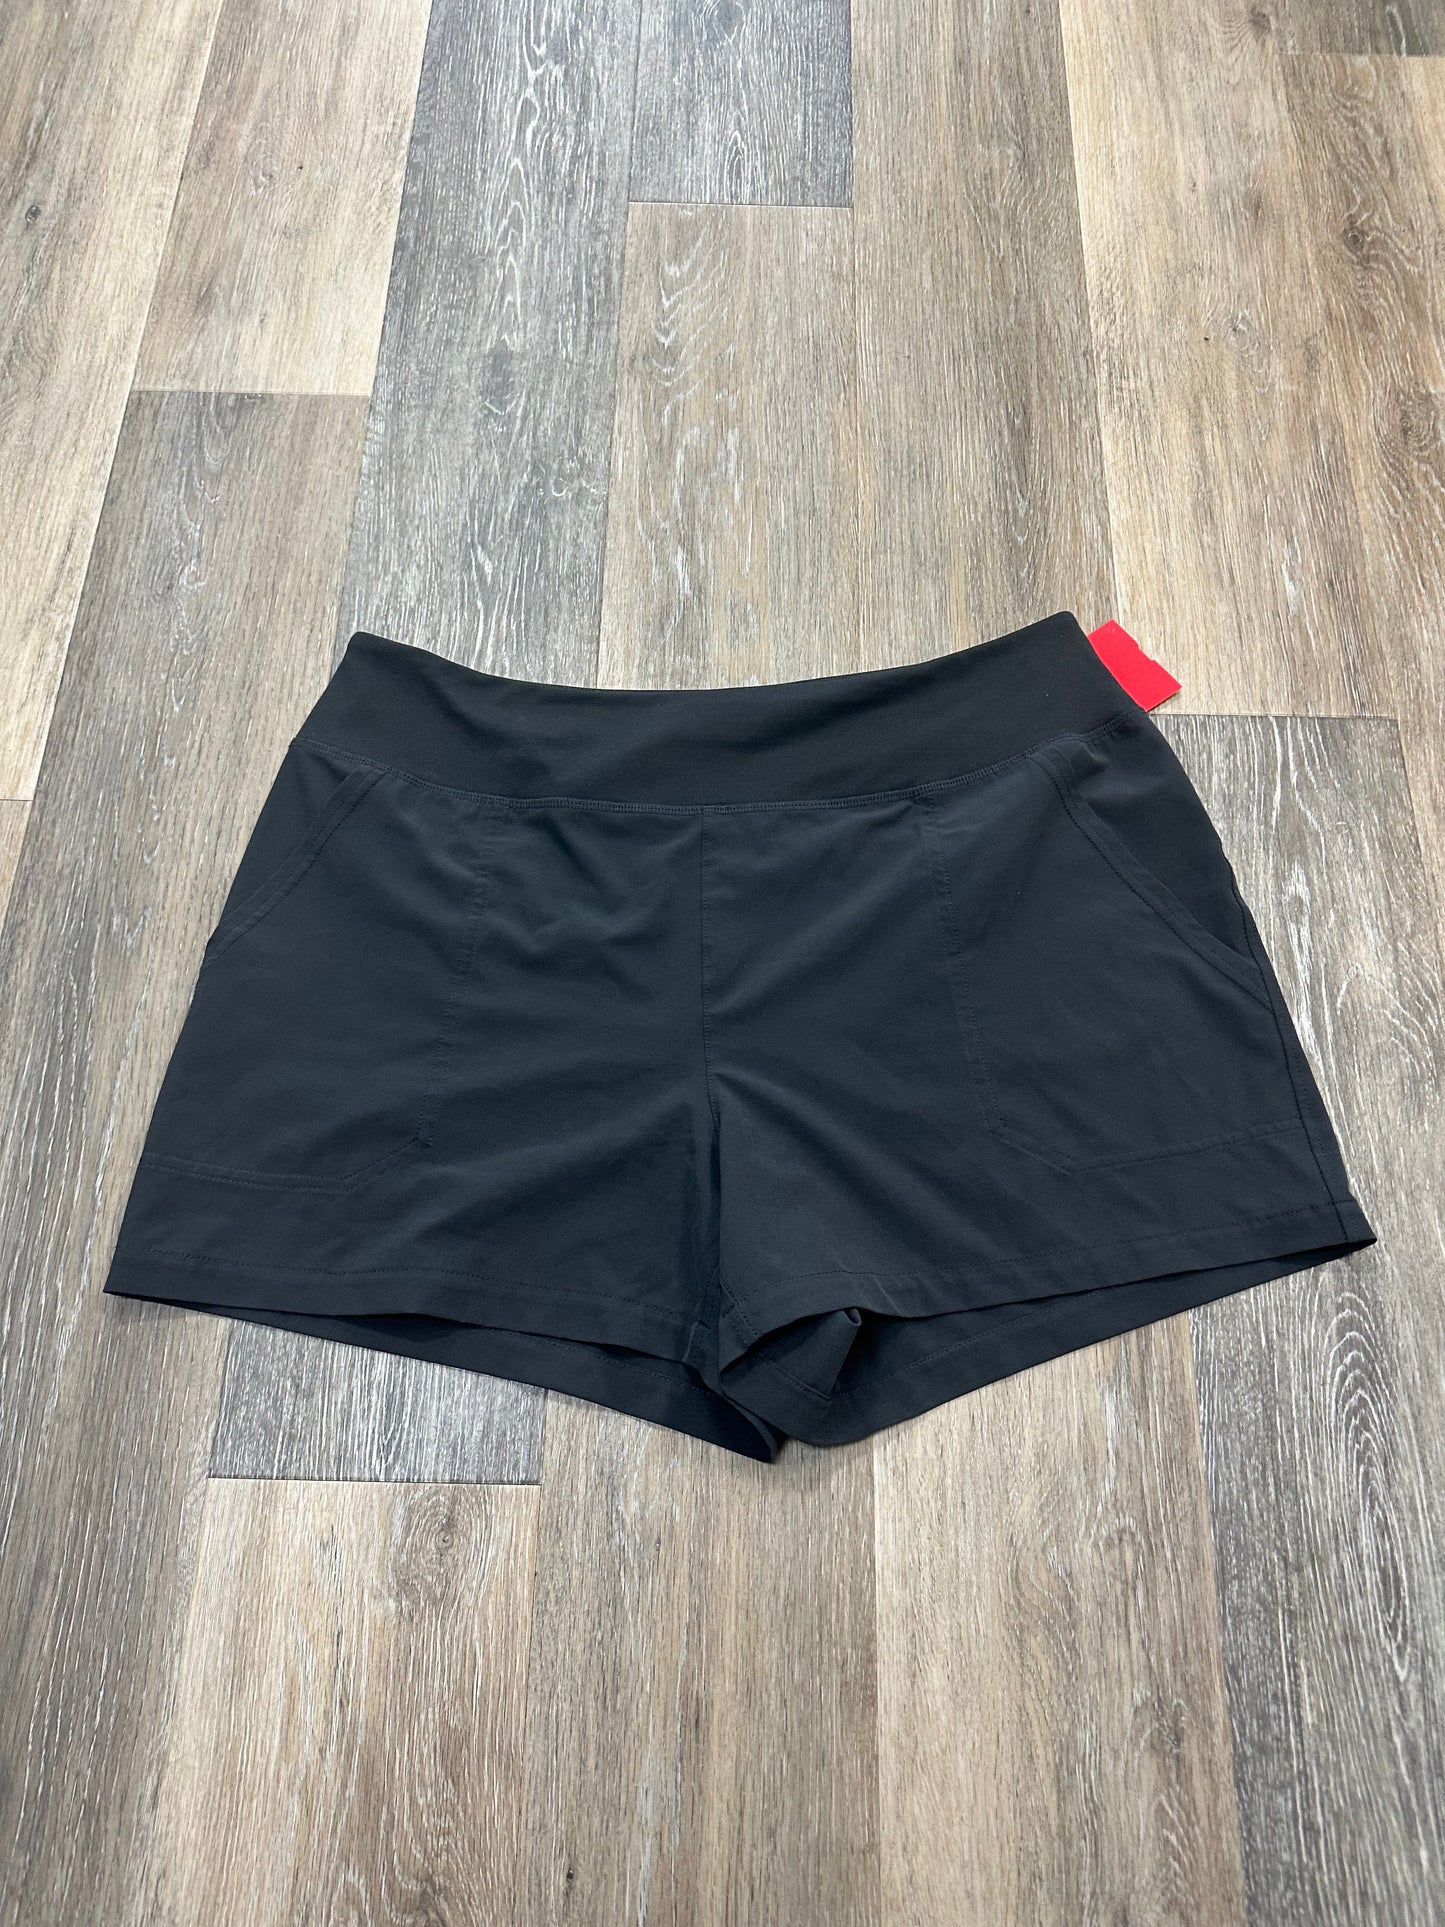 Grey Athletic Shorts Patagonia, Size L